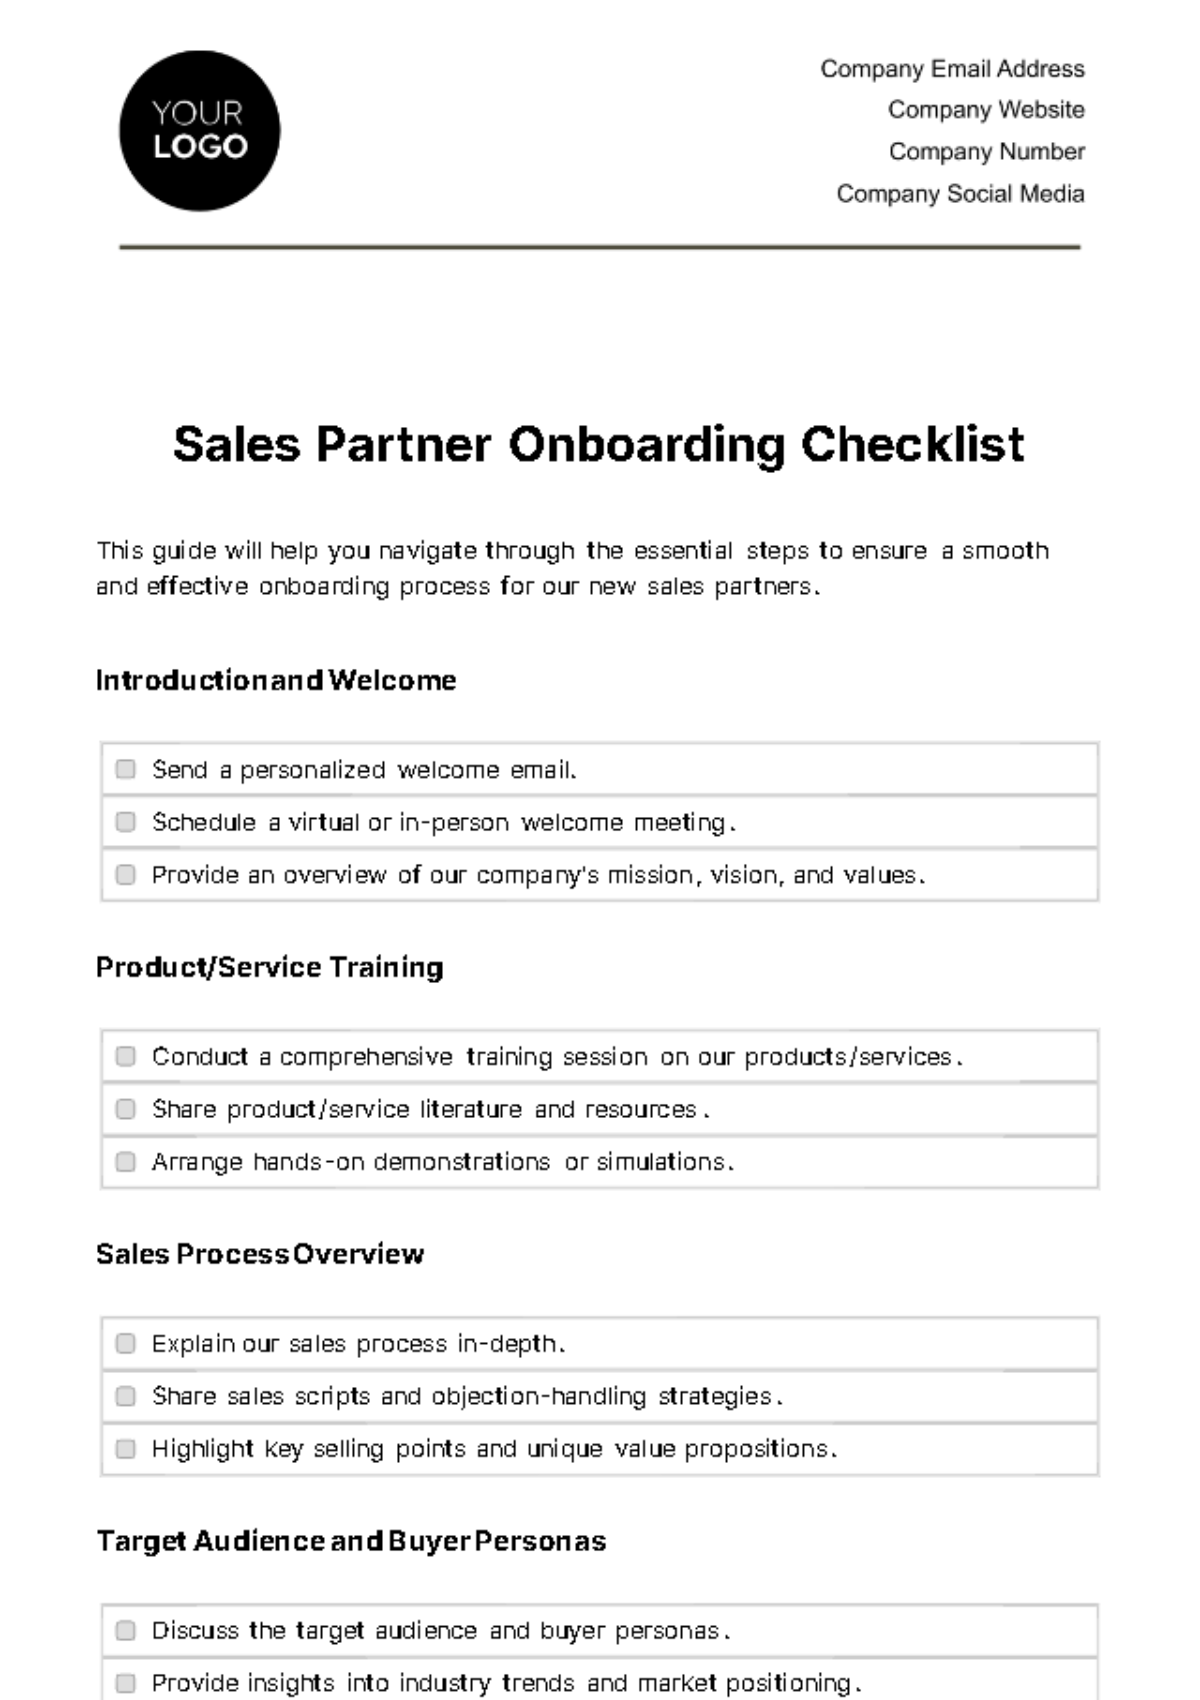 Free Sales Partner Onboarding Checklist Template